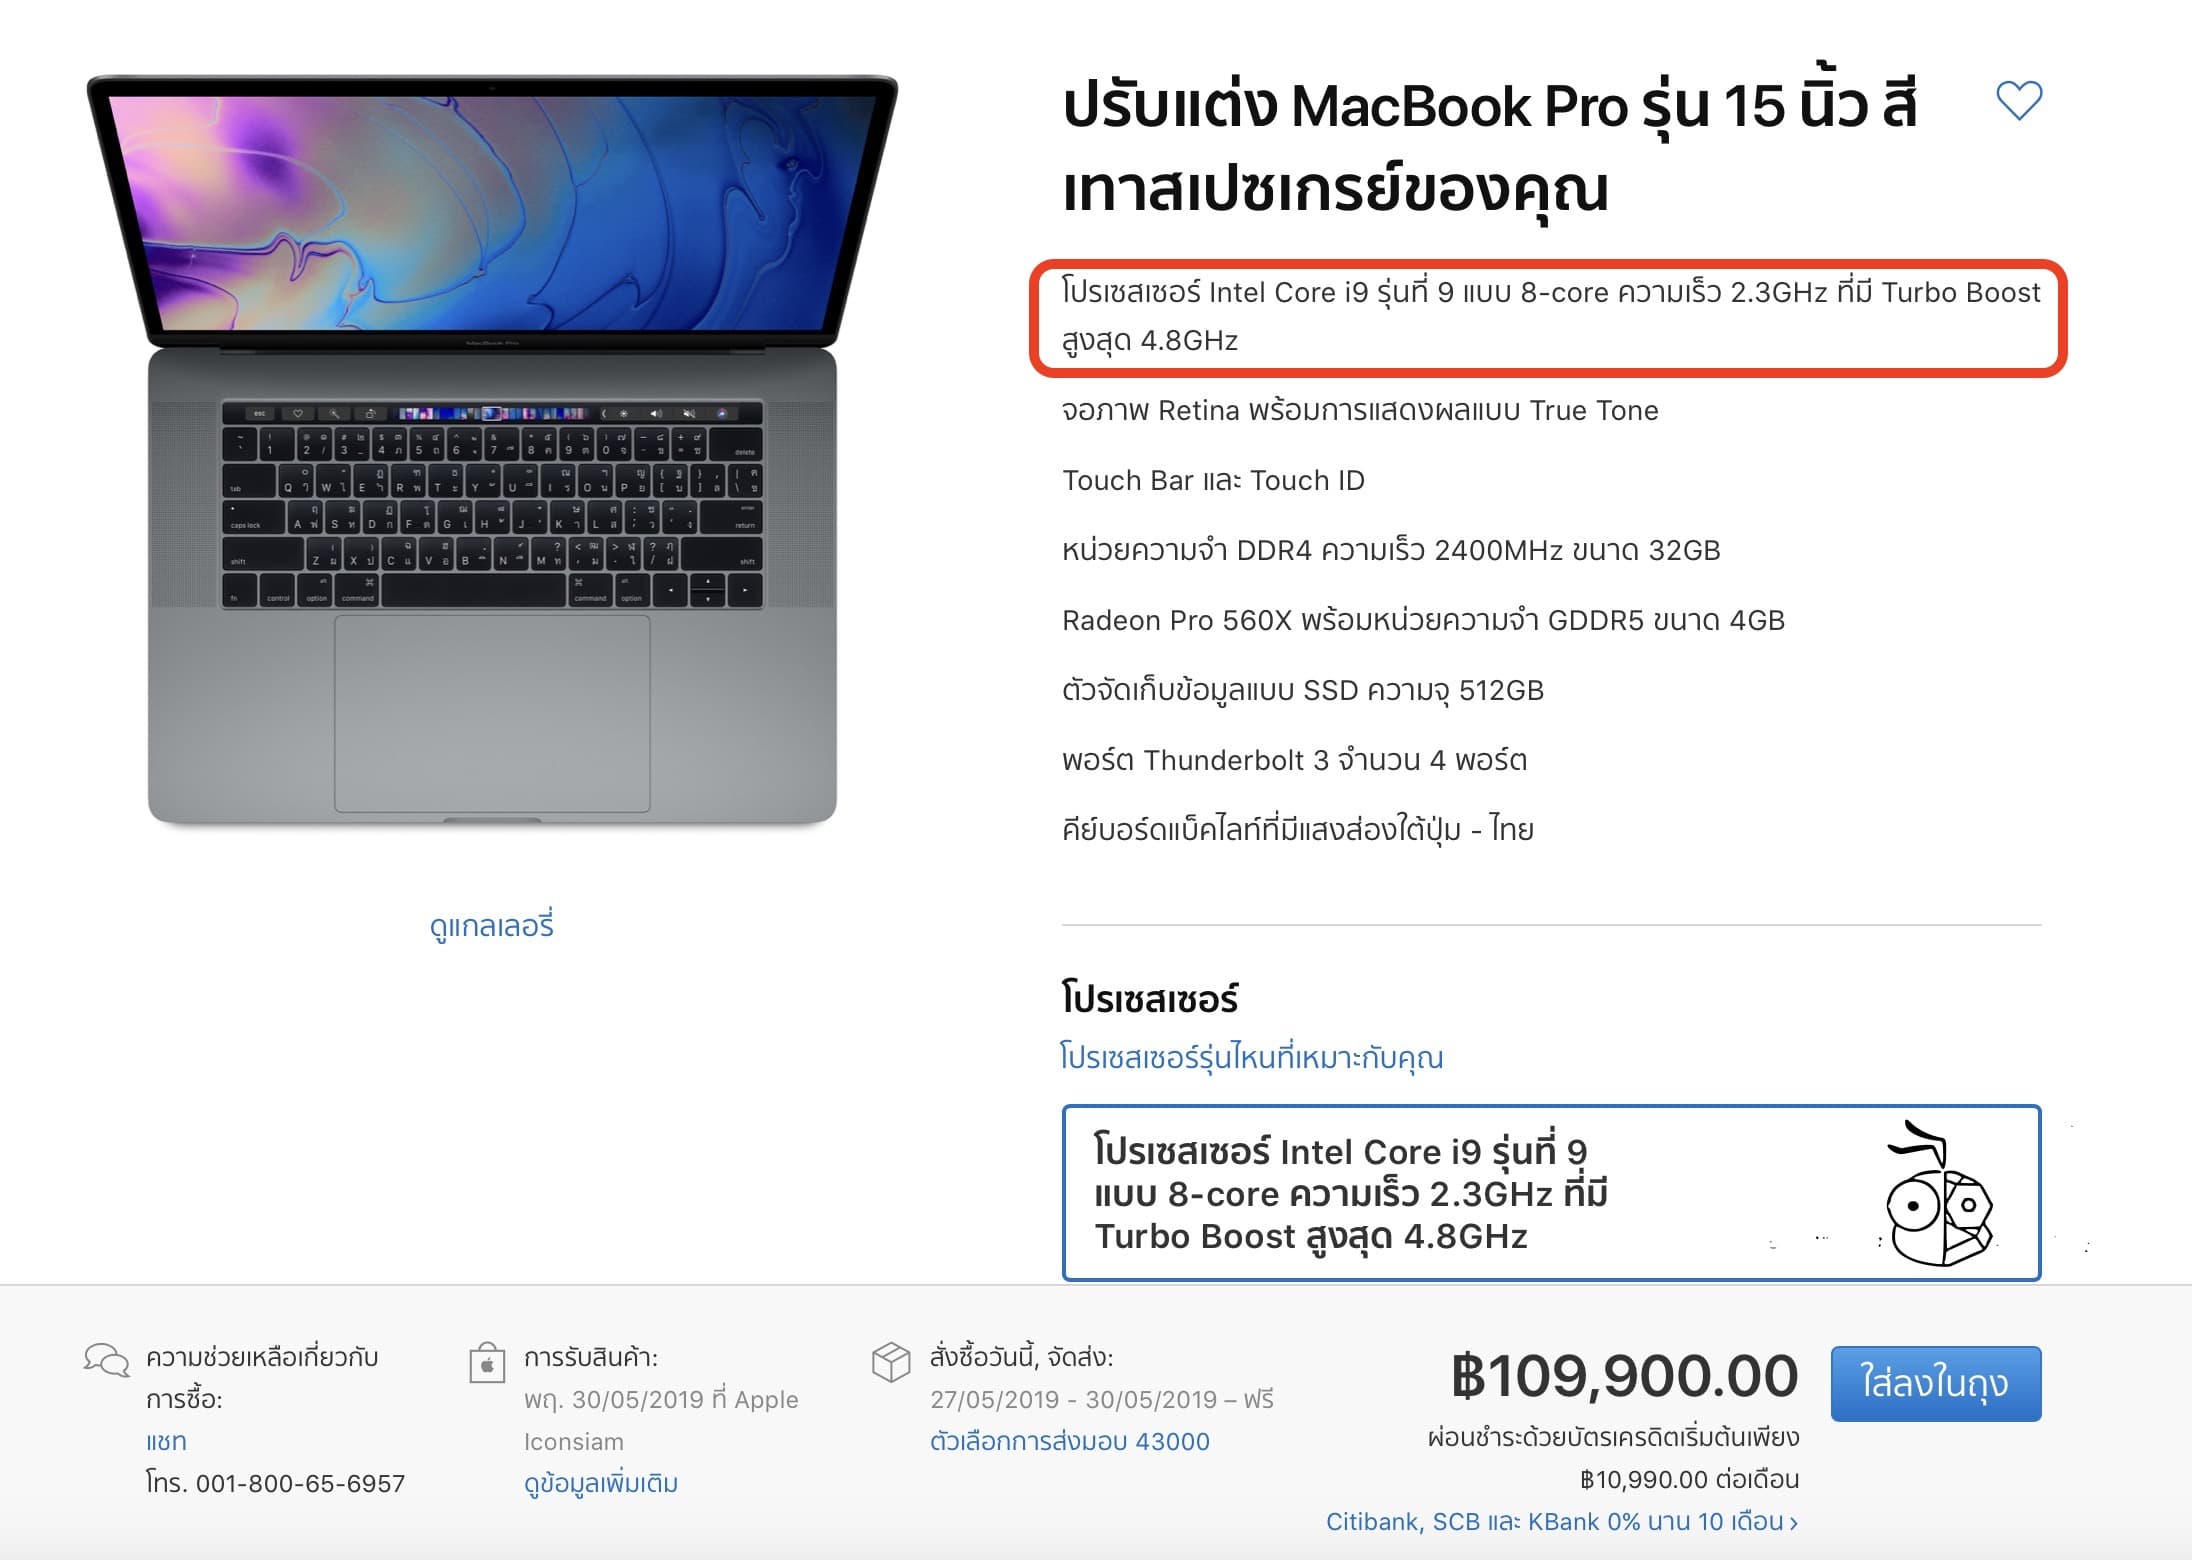 macbook pro ลดราคา